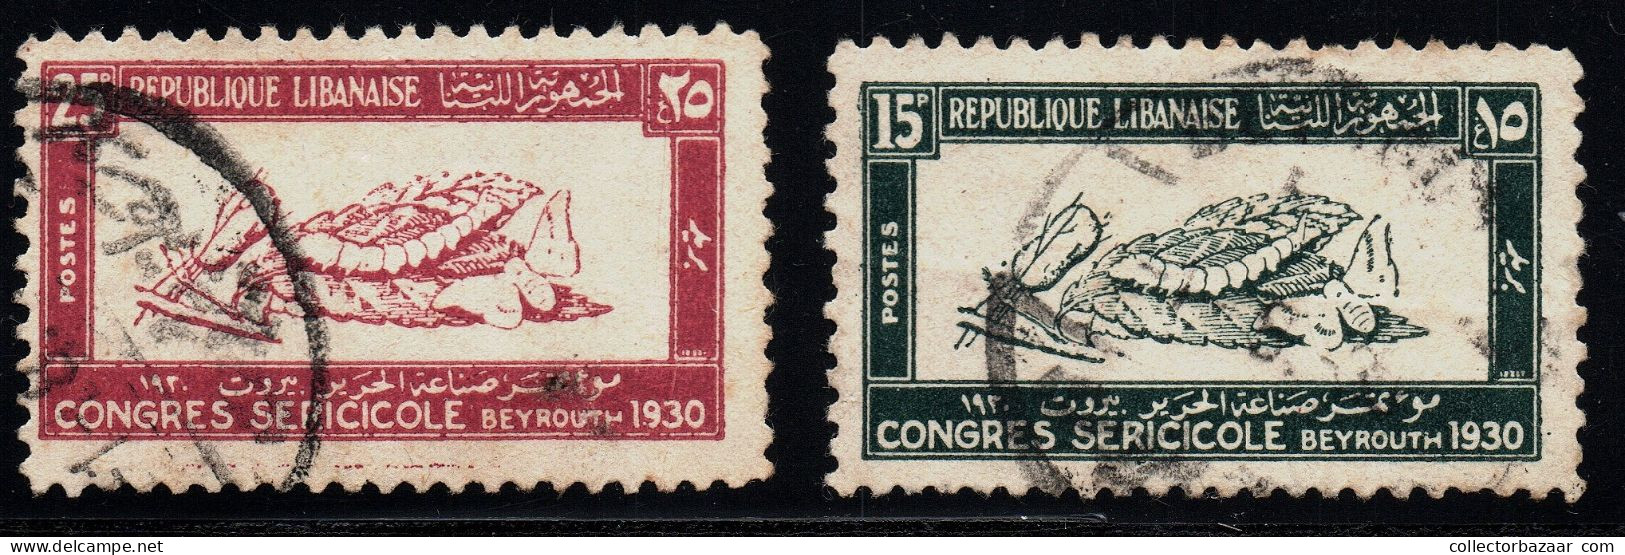 Liban Lebanon Silk Moth Michel 163-164 Used Scott 112 - 113 Very Nice Stamps Cv$25 - Libano